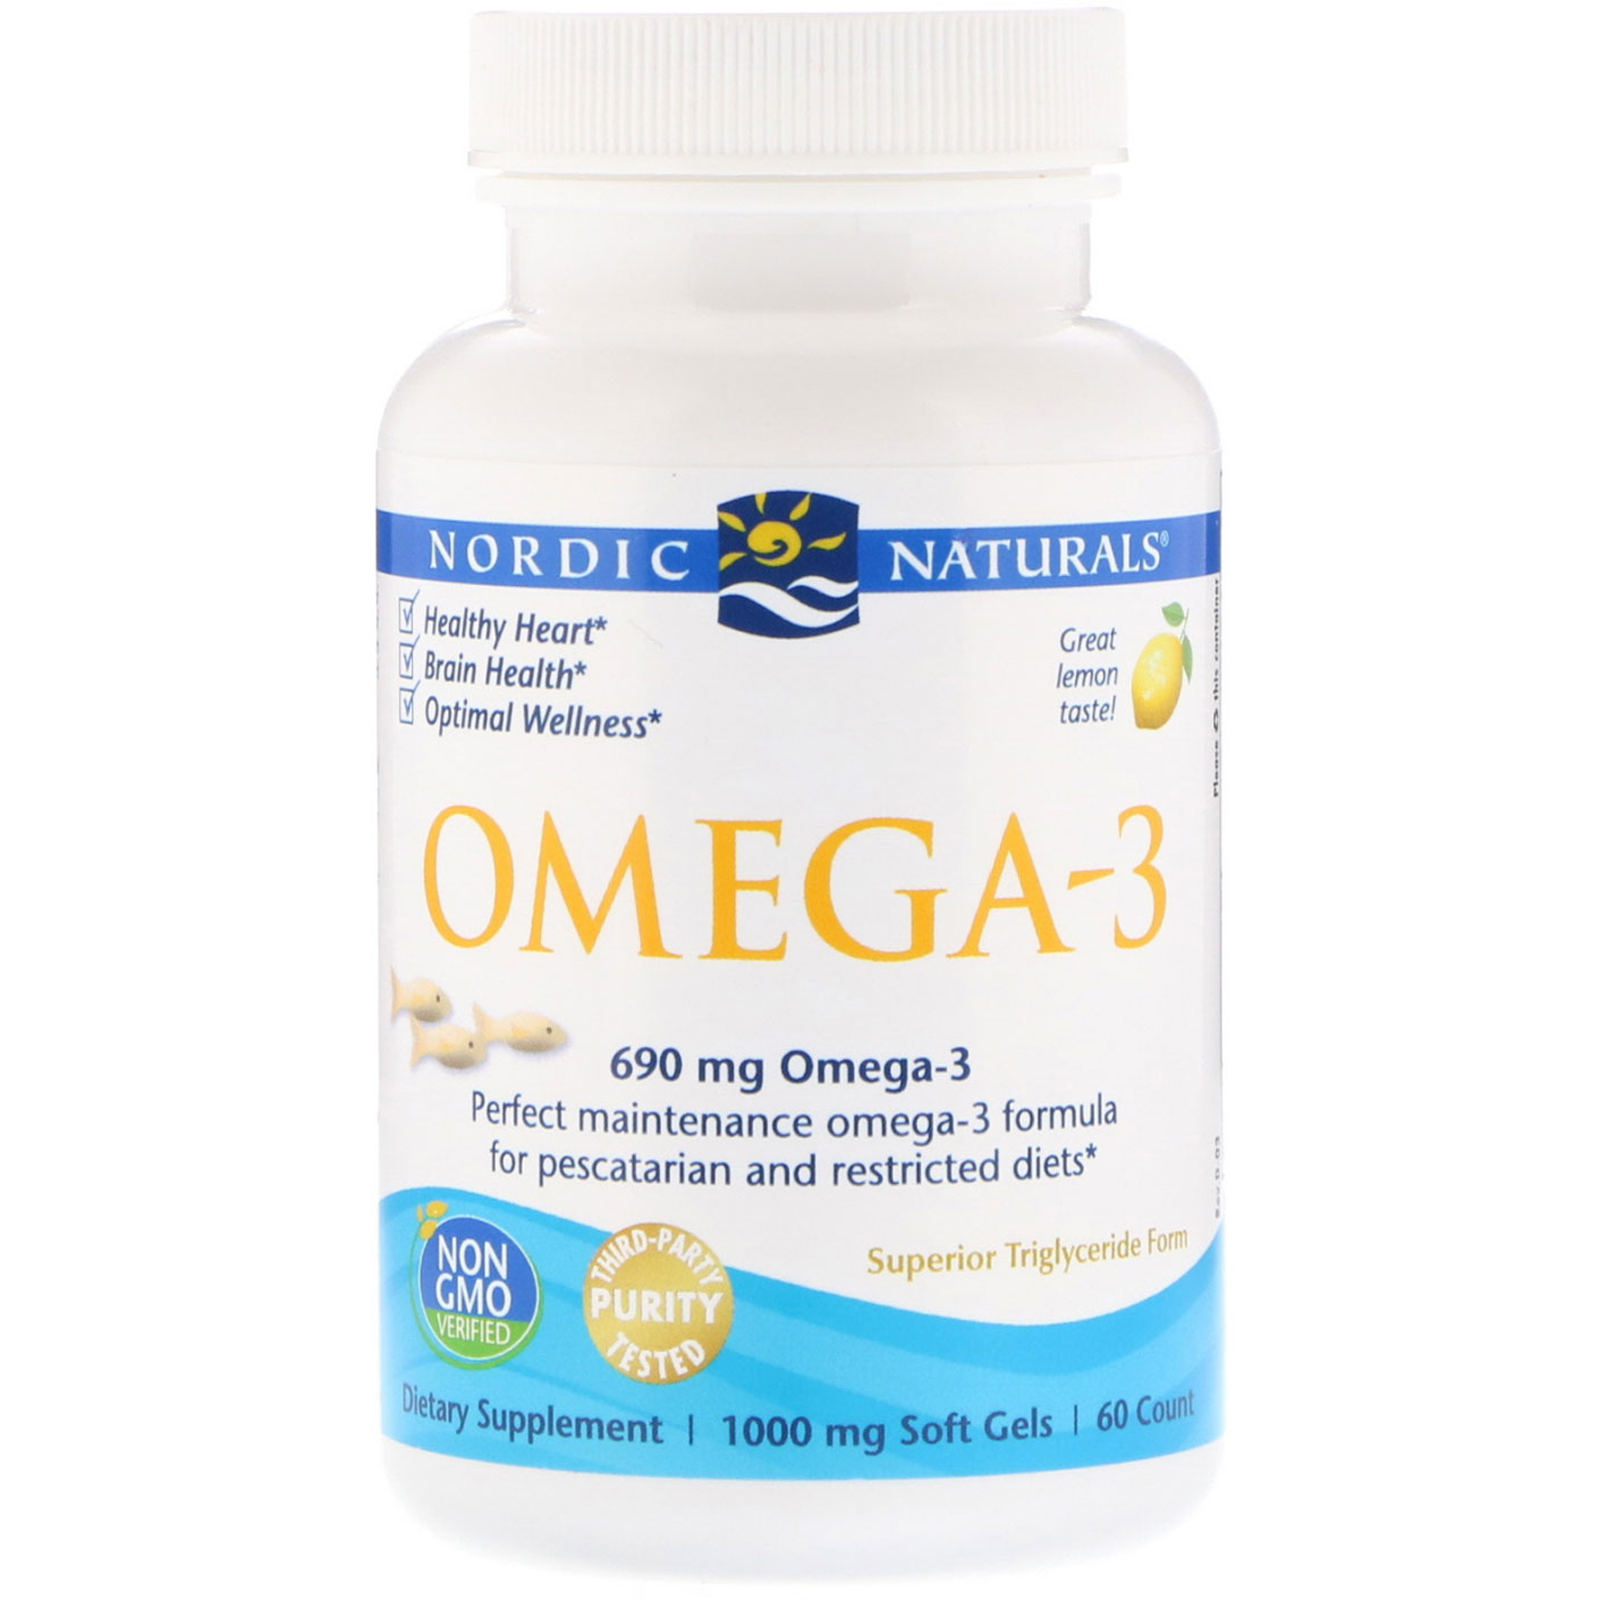   omega 3 nordic و now foods omega 3